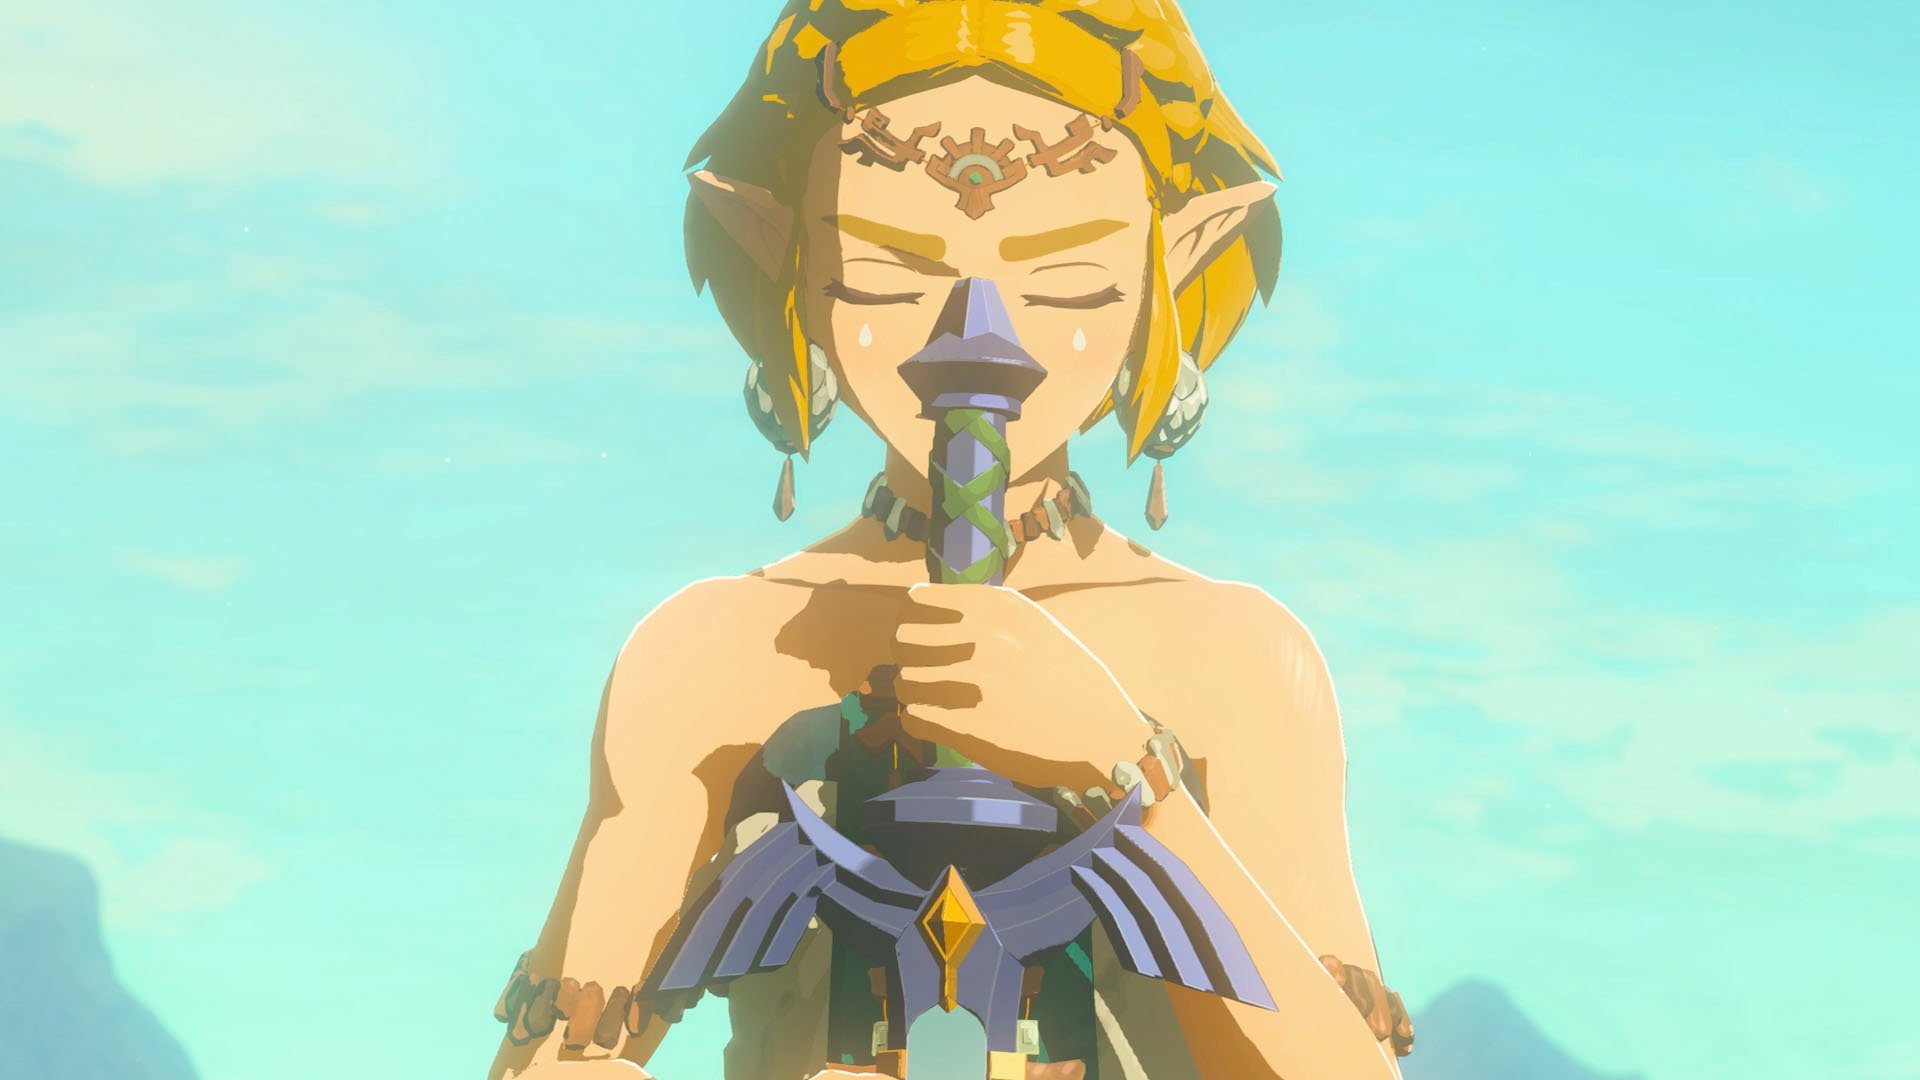 The Legend of Kingdom Tears Switch of Nintendo the Zelda